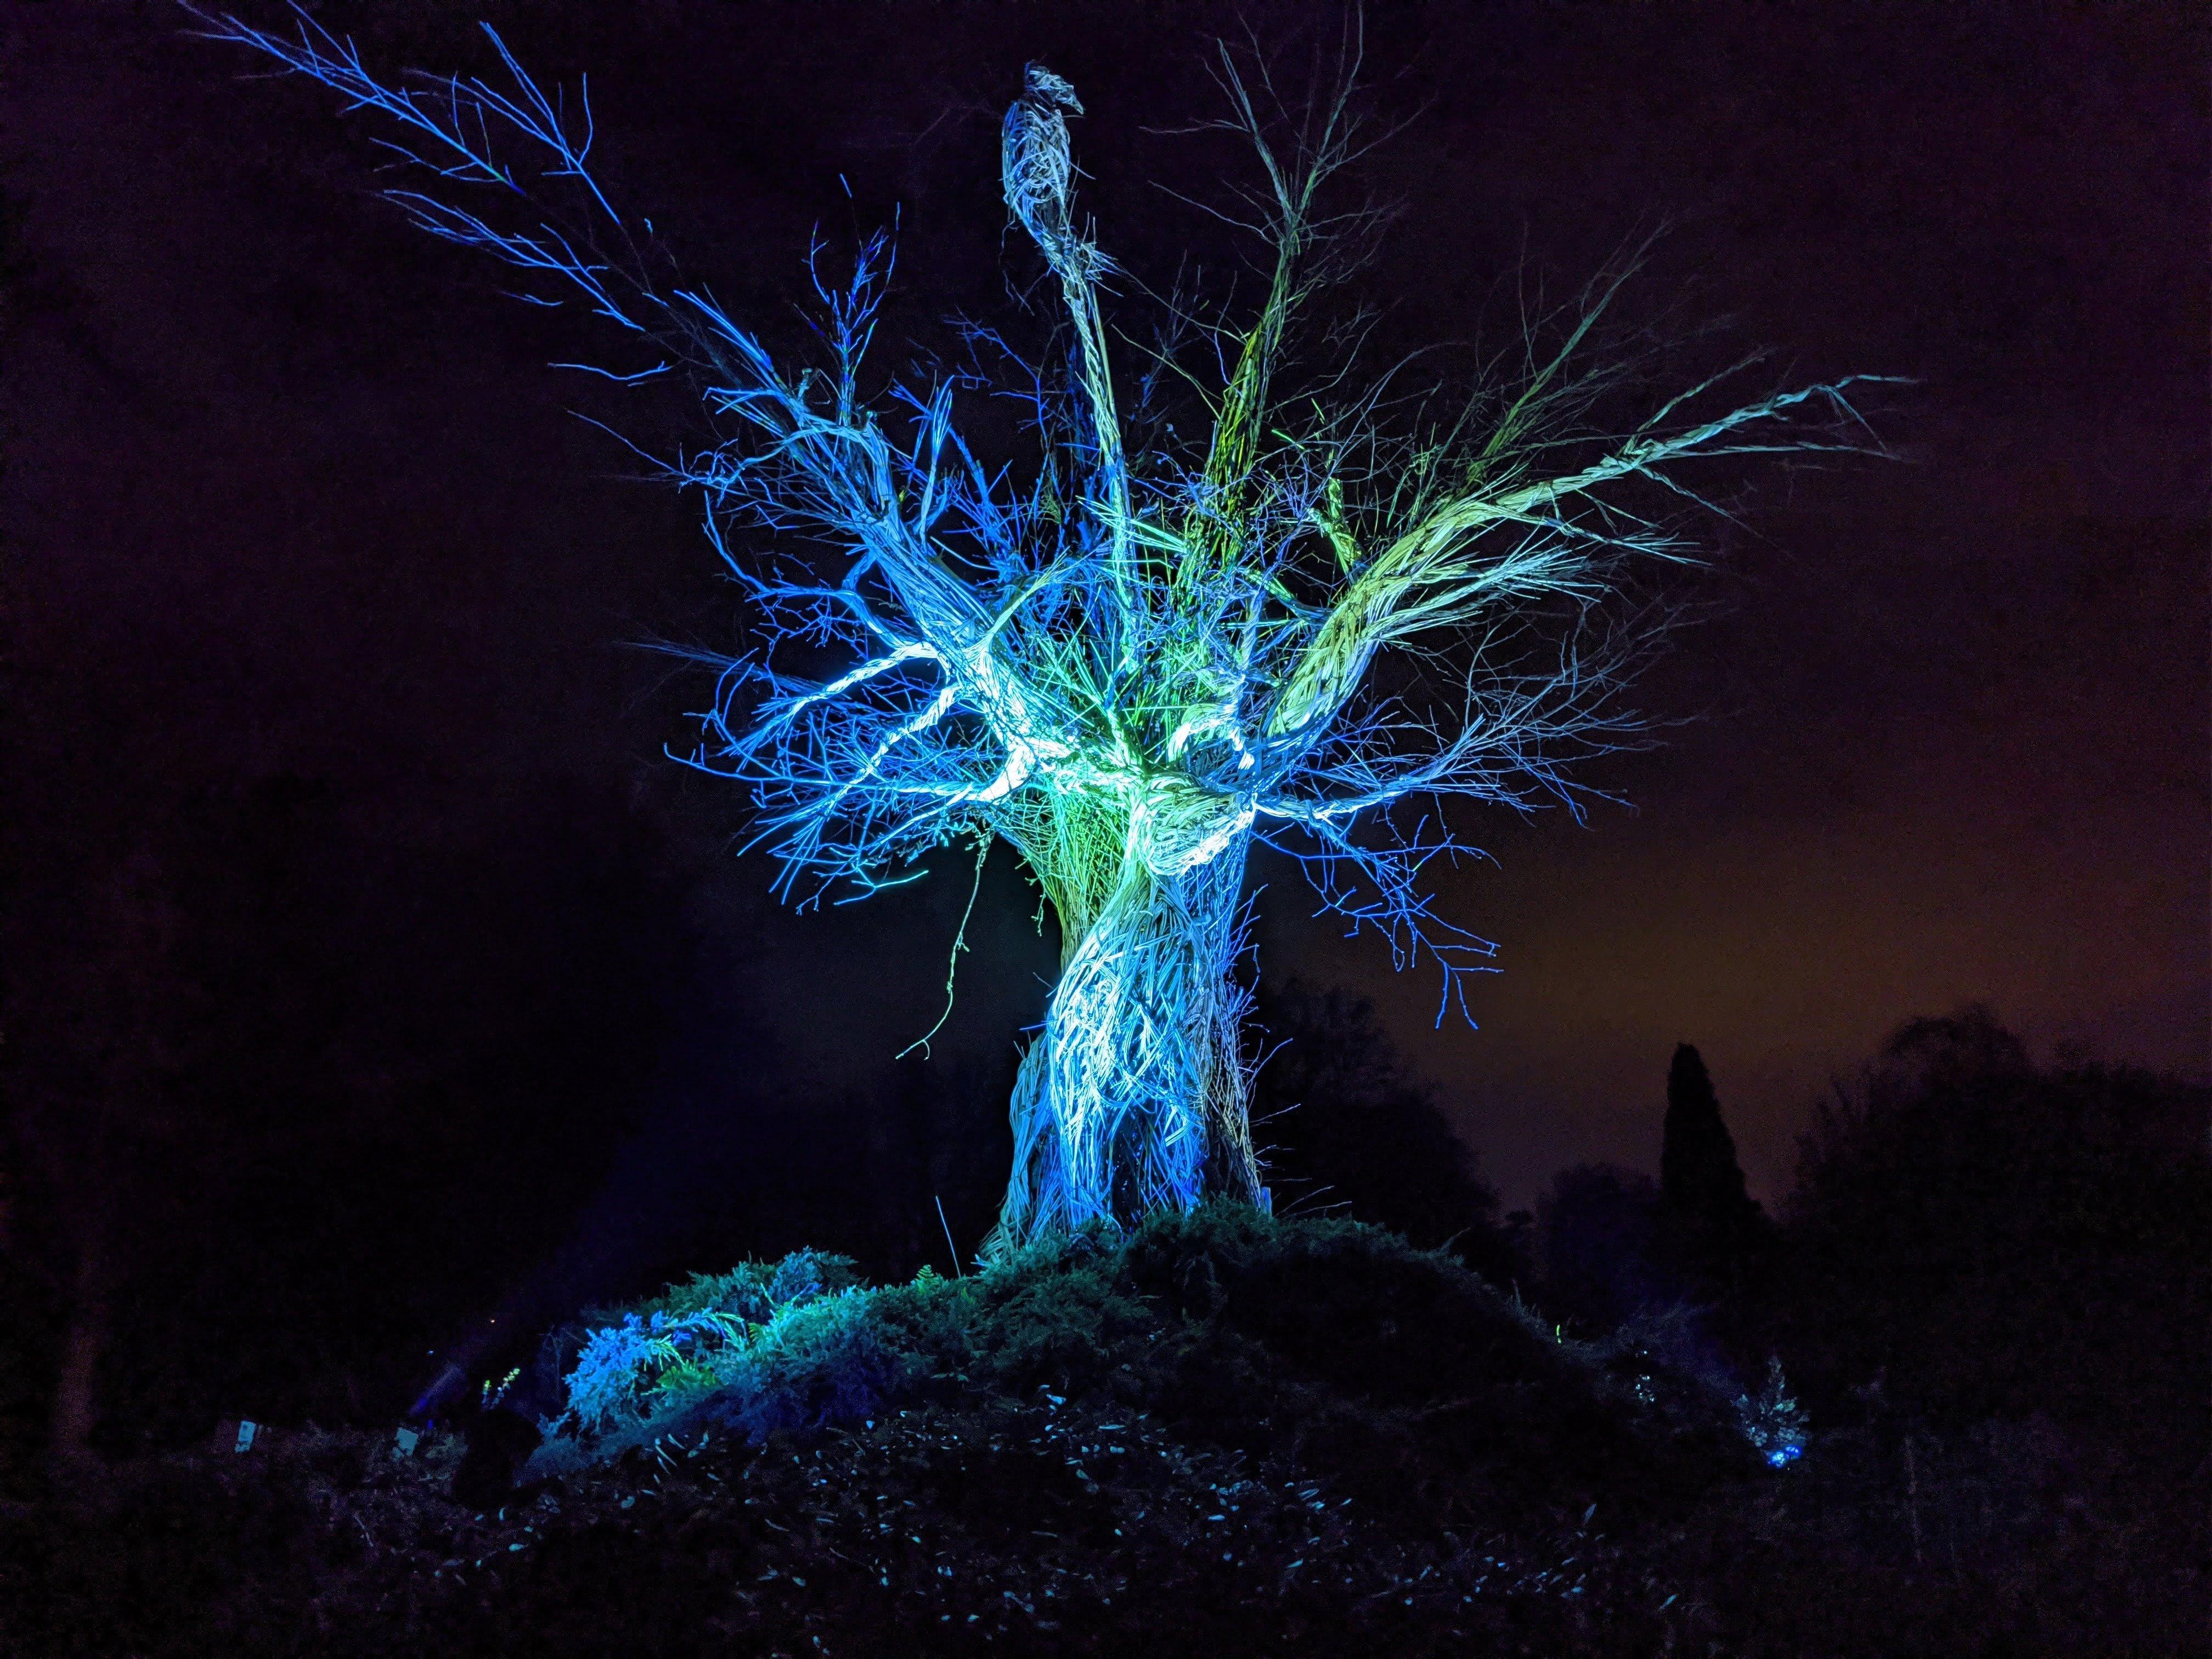 Glow Wild at Wakehurst. Photo by Alan Stainer